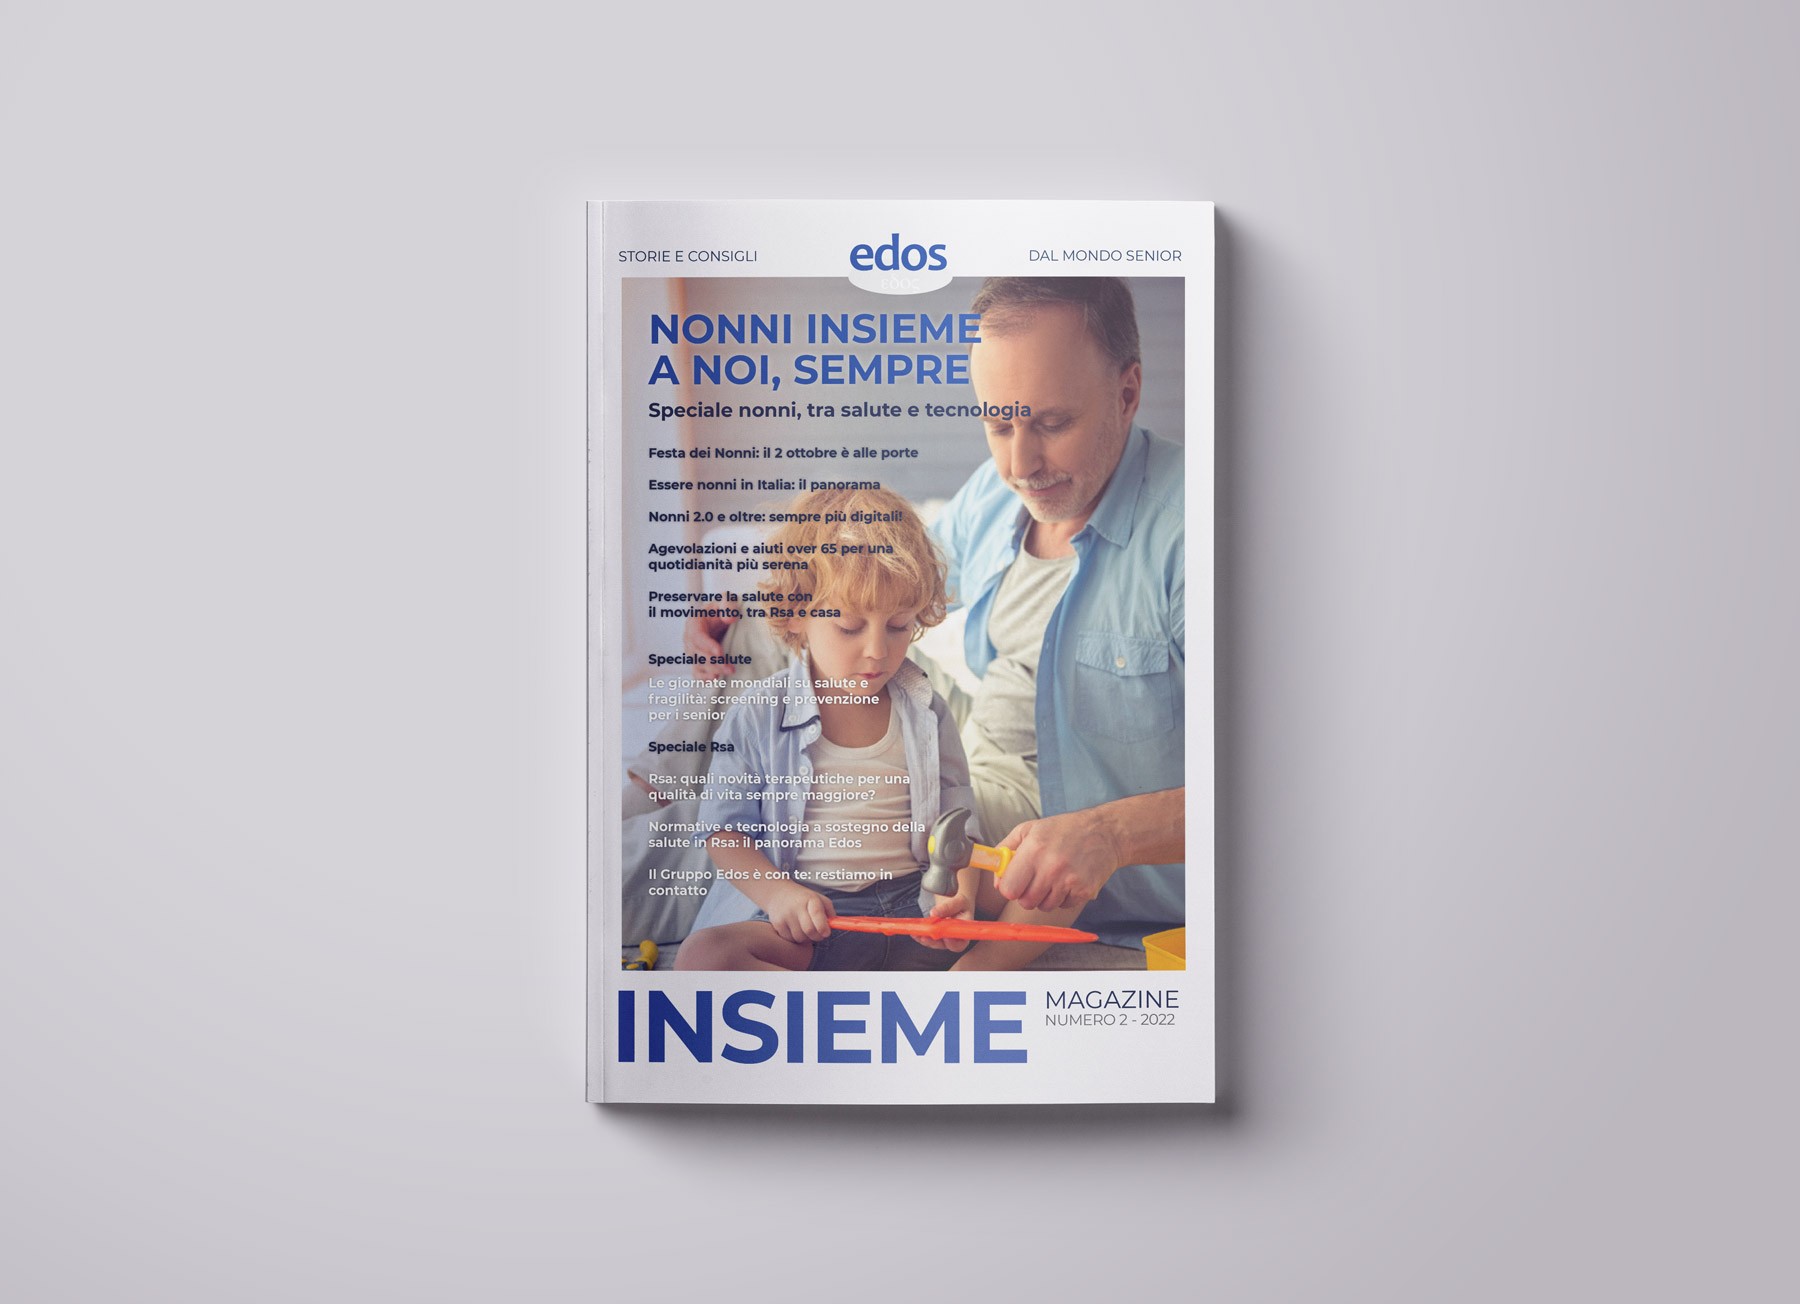 Nonni-Insieme-Magazine-Edos-n2-2022